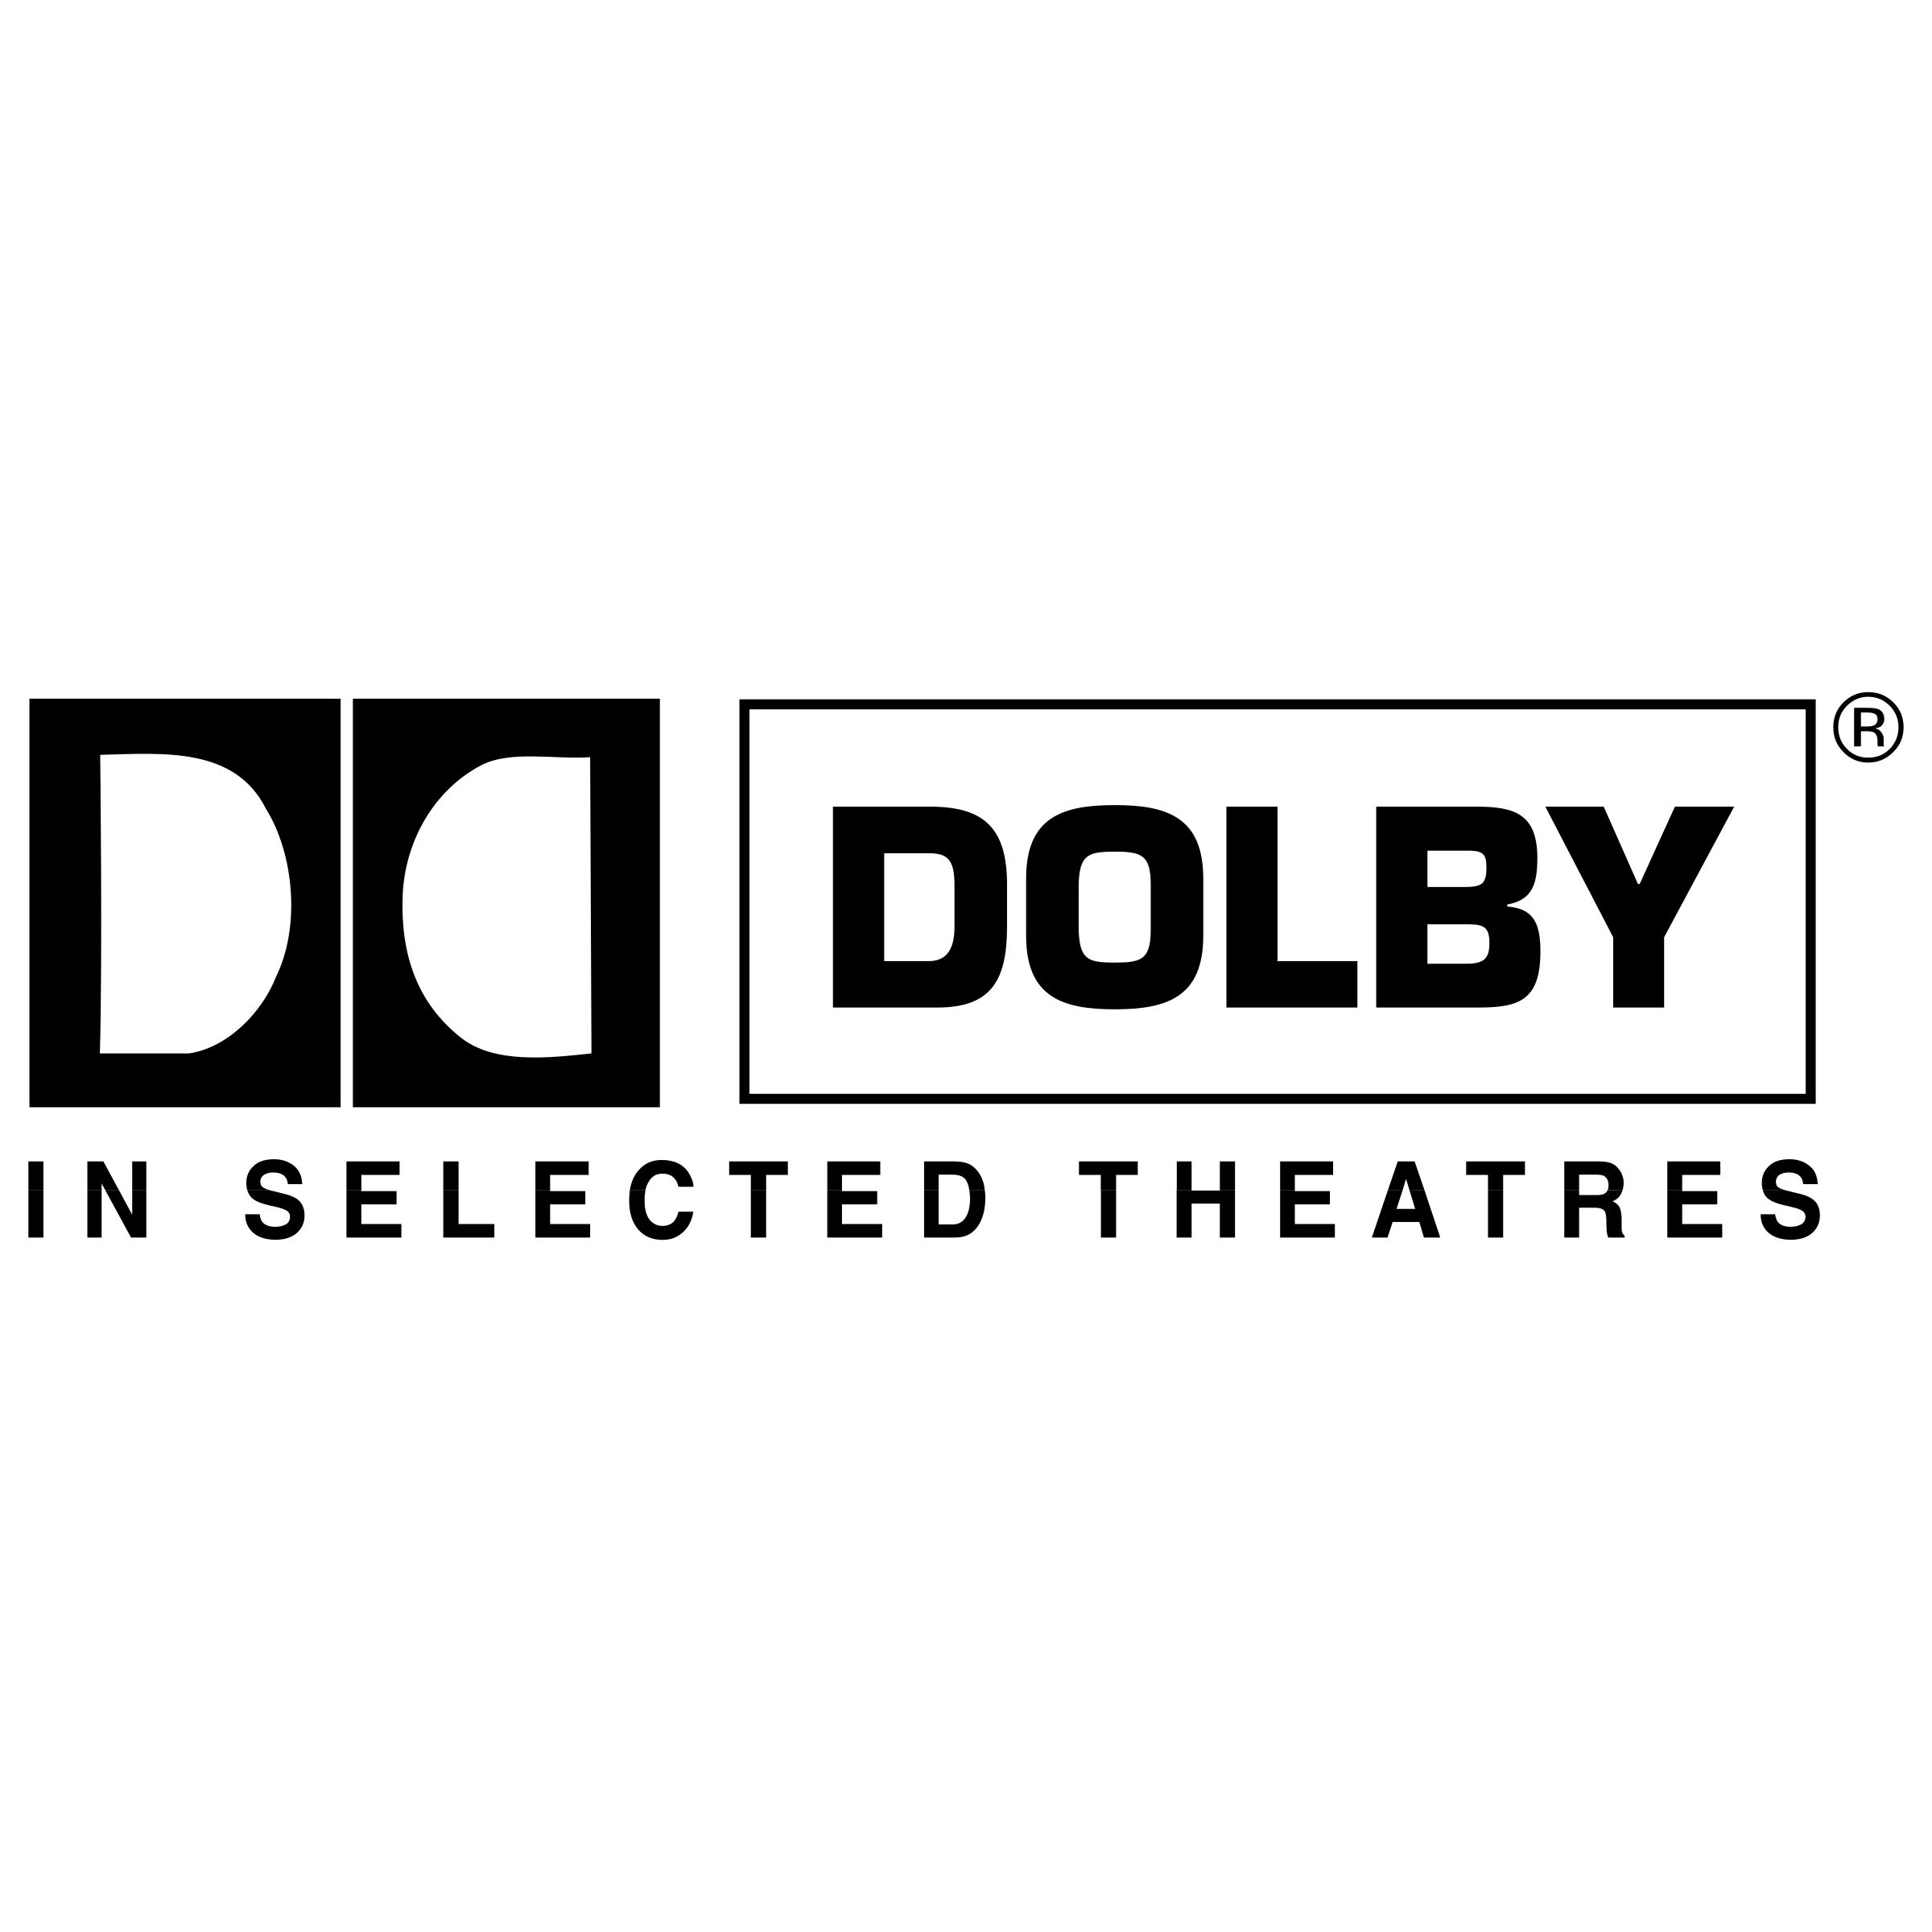 dolby digital logo technicolor logo